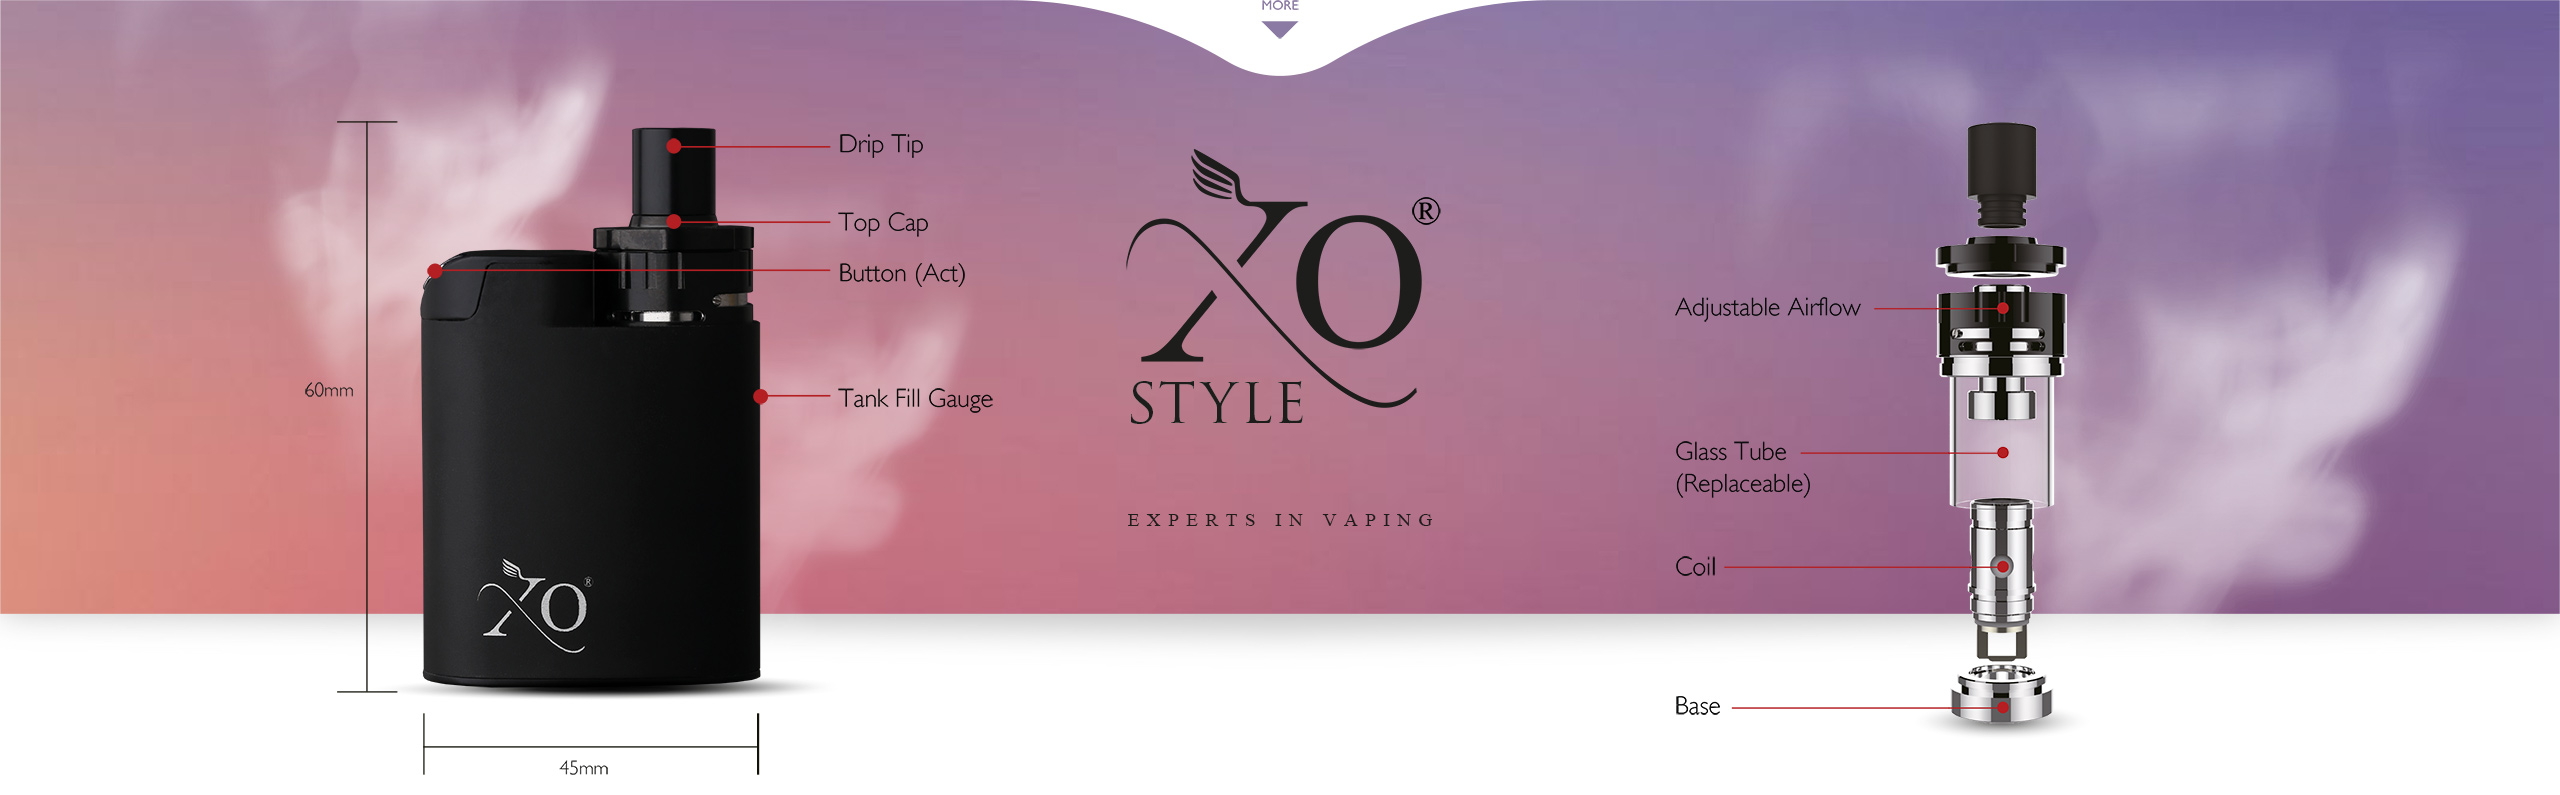 XO Style Vape Kit - New Product